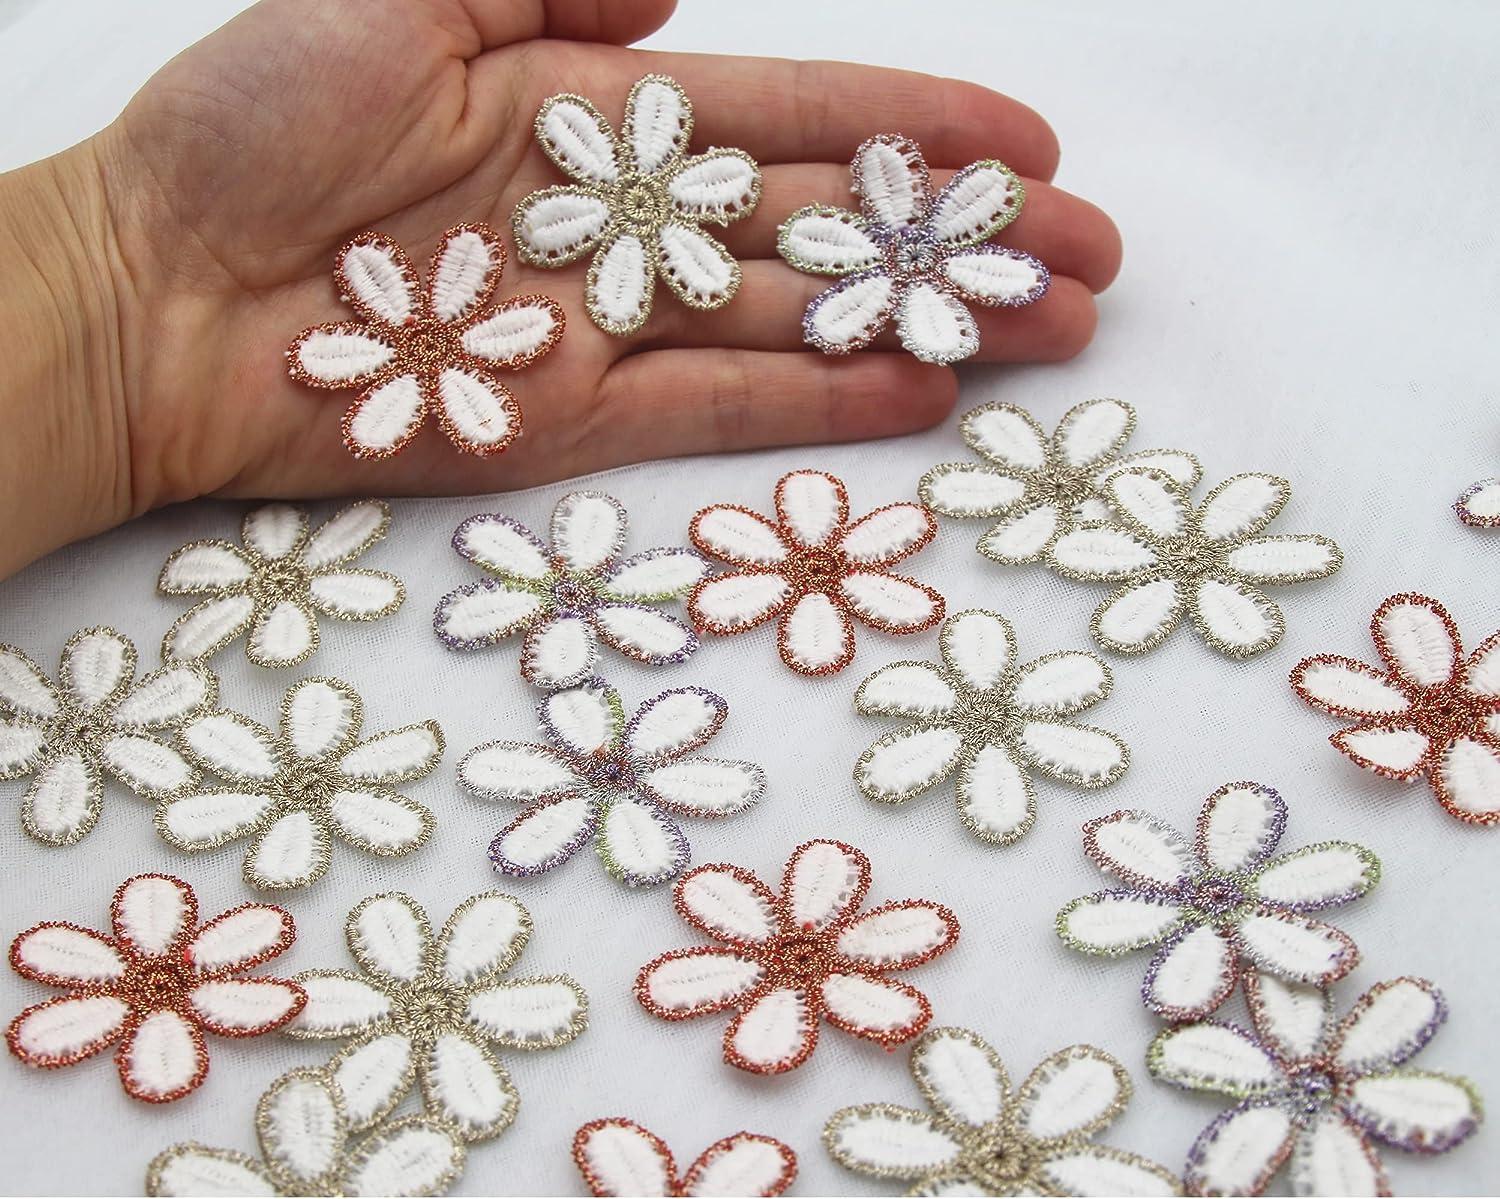 MEISFLY 64Pcs Flower Sew On Decorative Patches Crochet Floral Applique  Embellishments for Clothes, Bags, Arts Crafts DIY Decor, Hats, 16 Pcs/Color